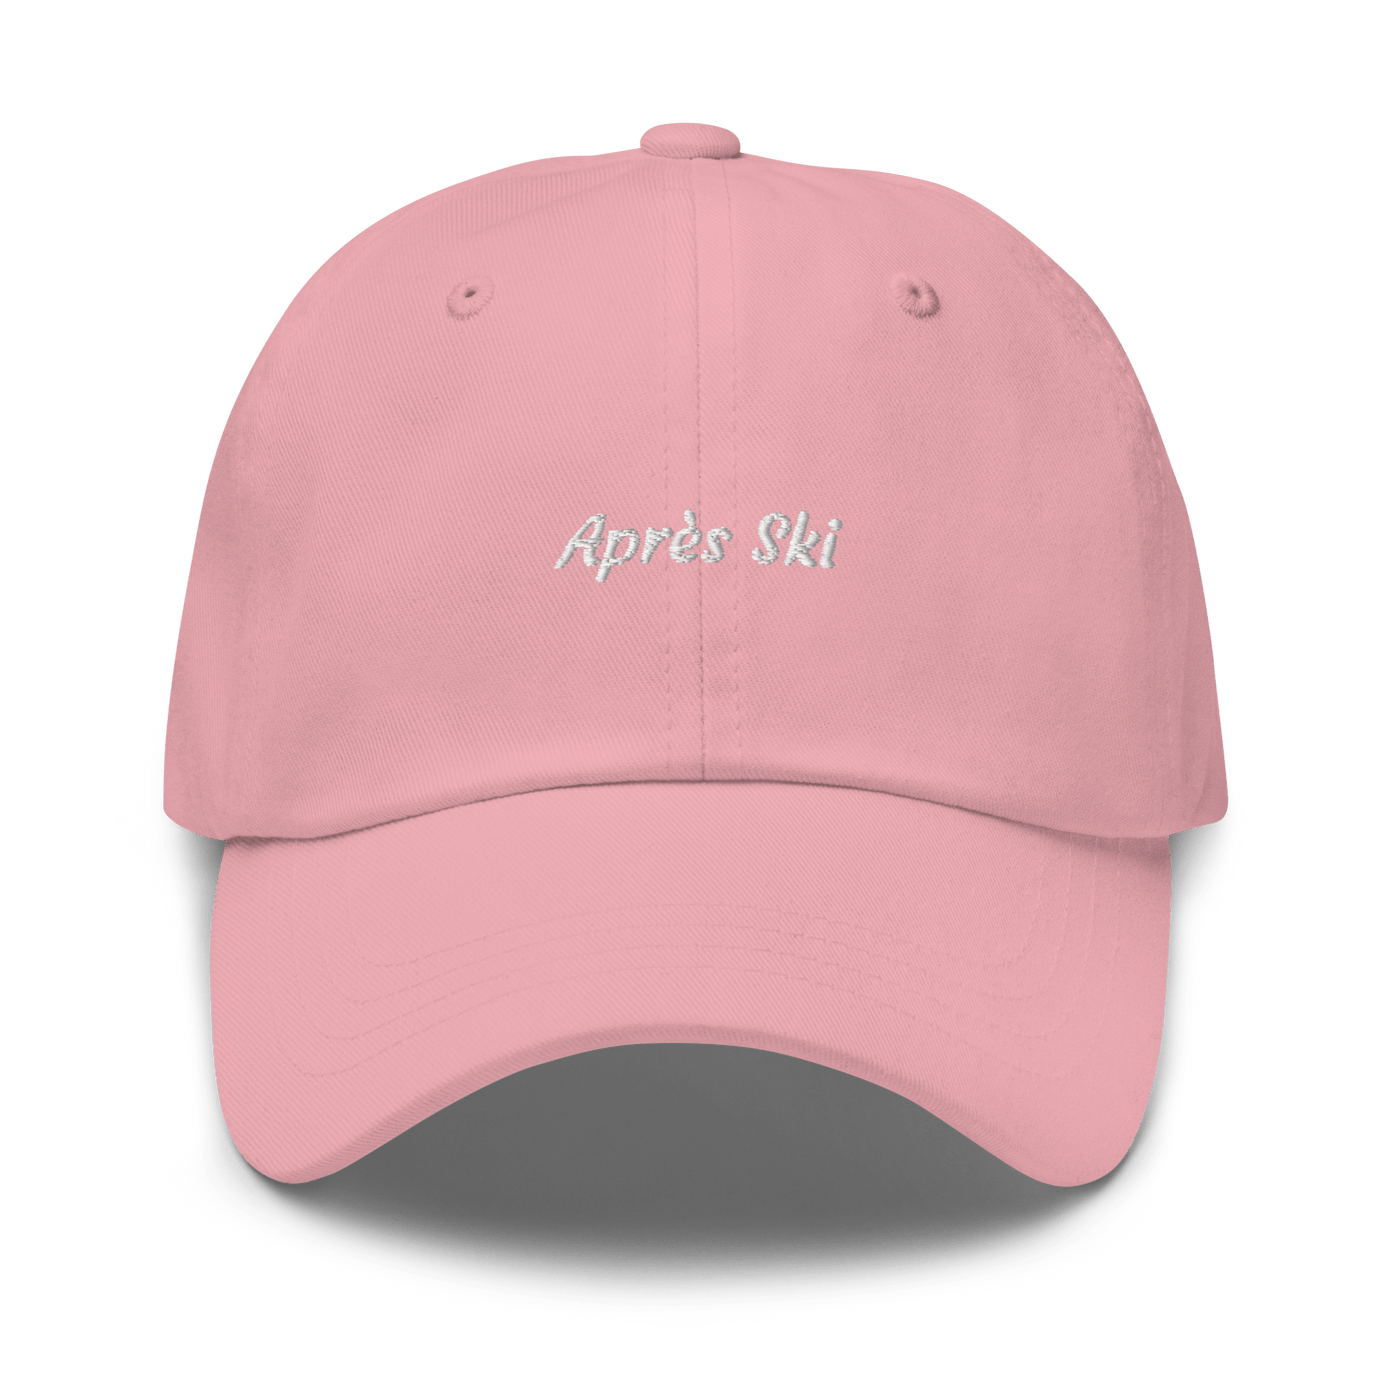 Après Ski Dad hat - Pink - - Just Another Cap Store